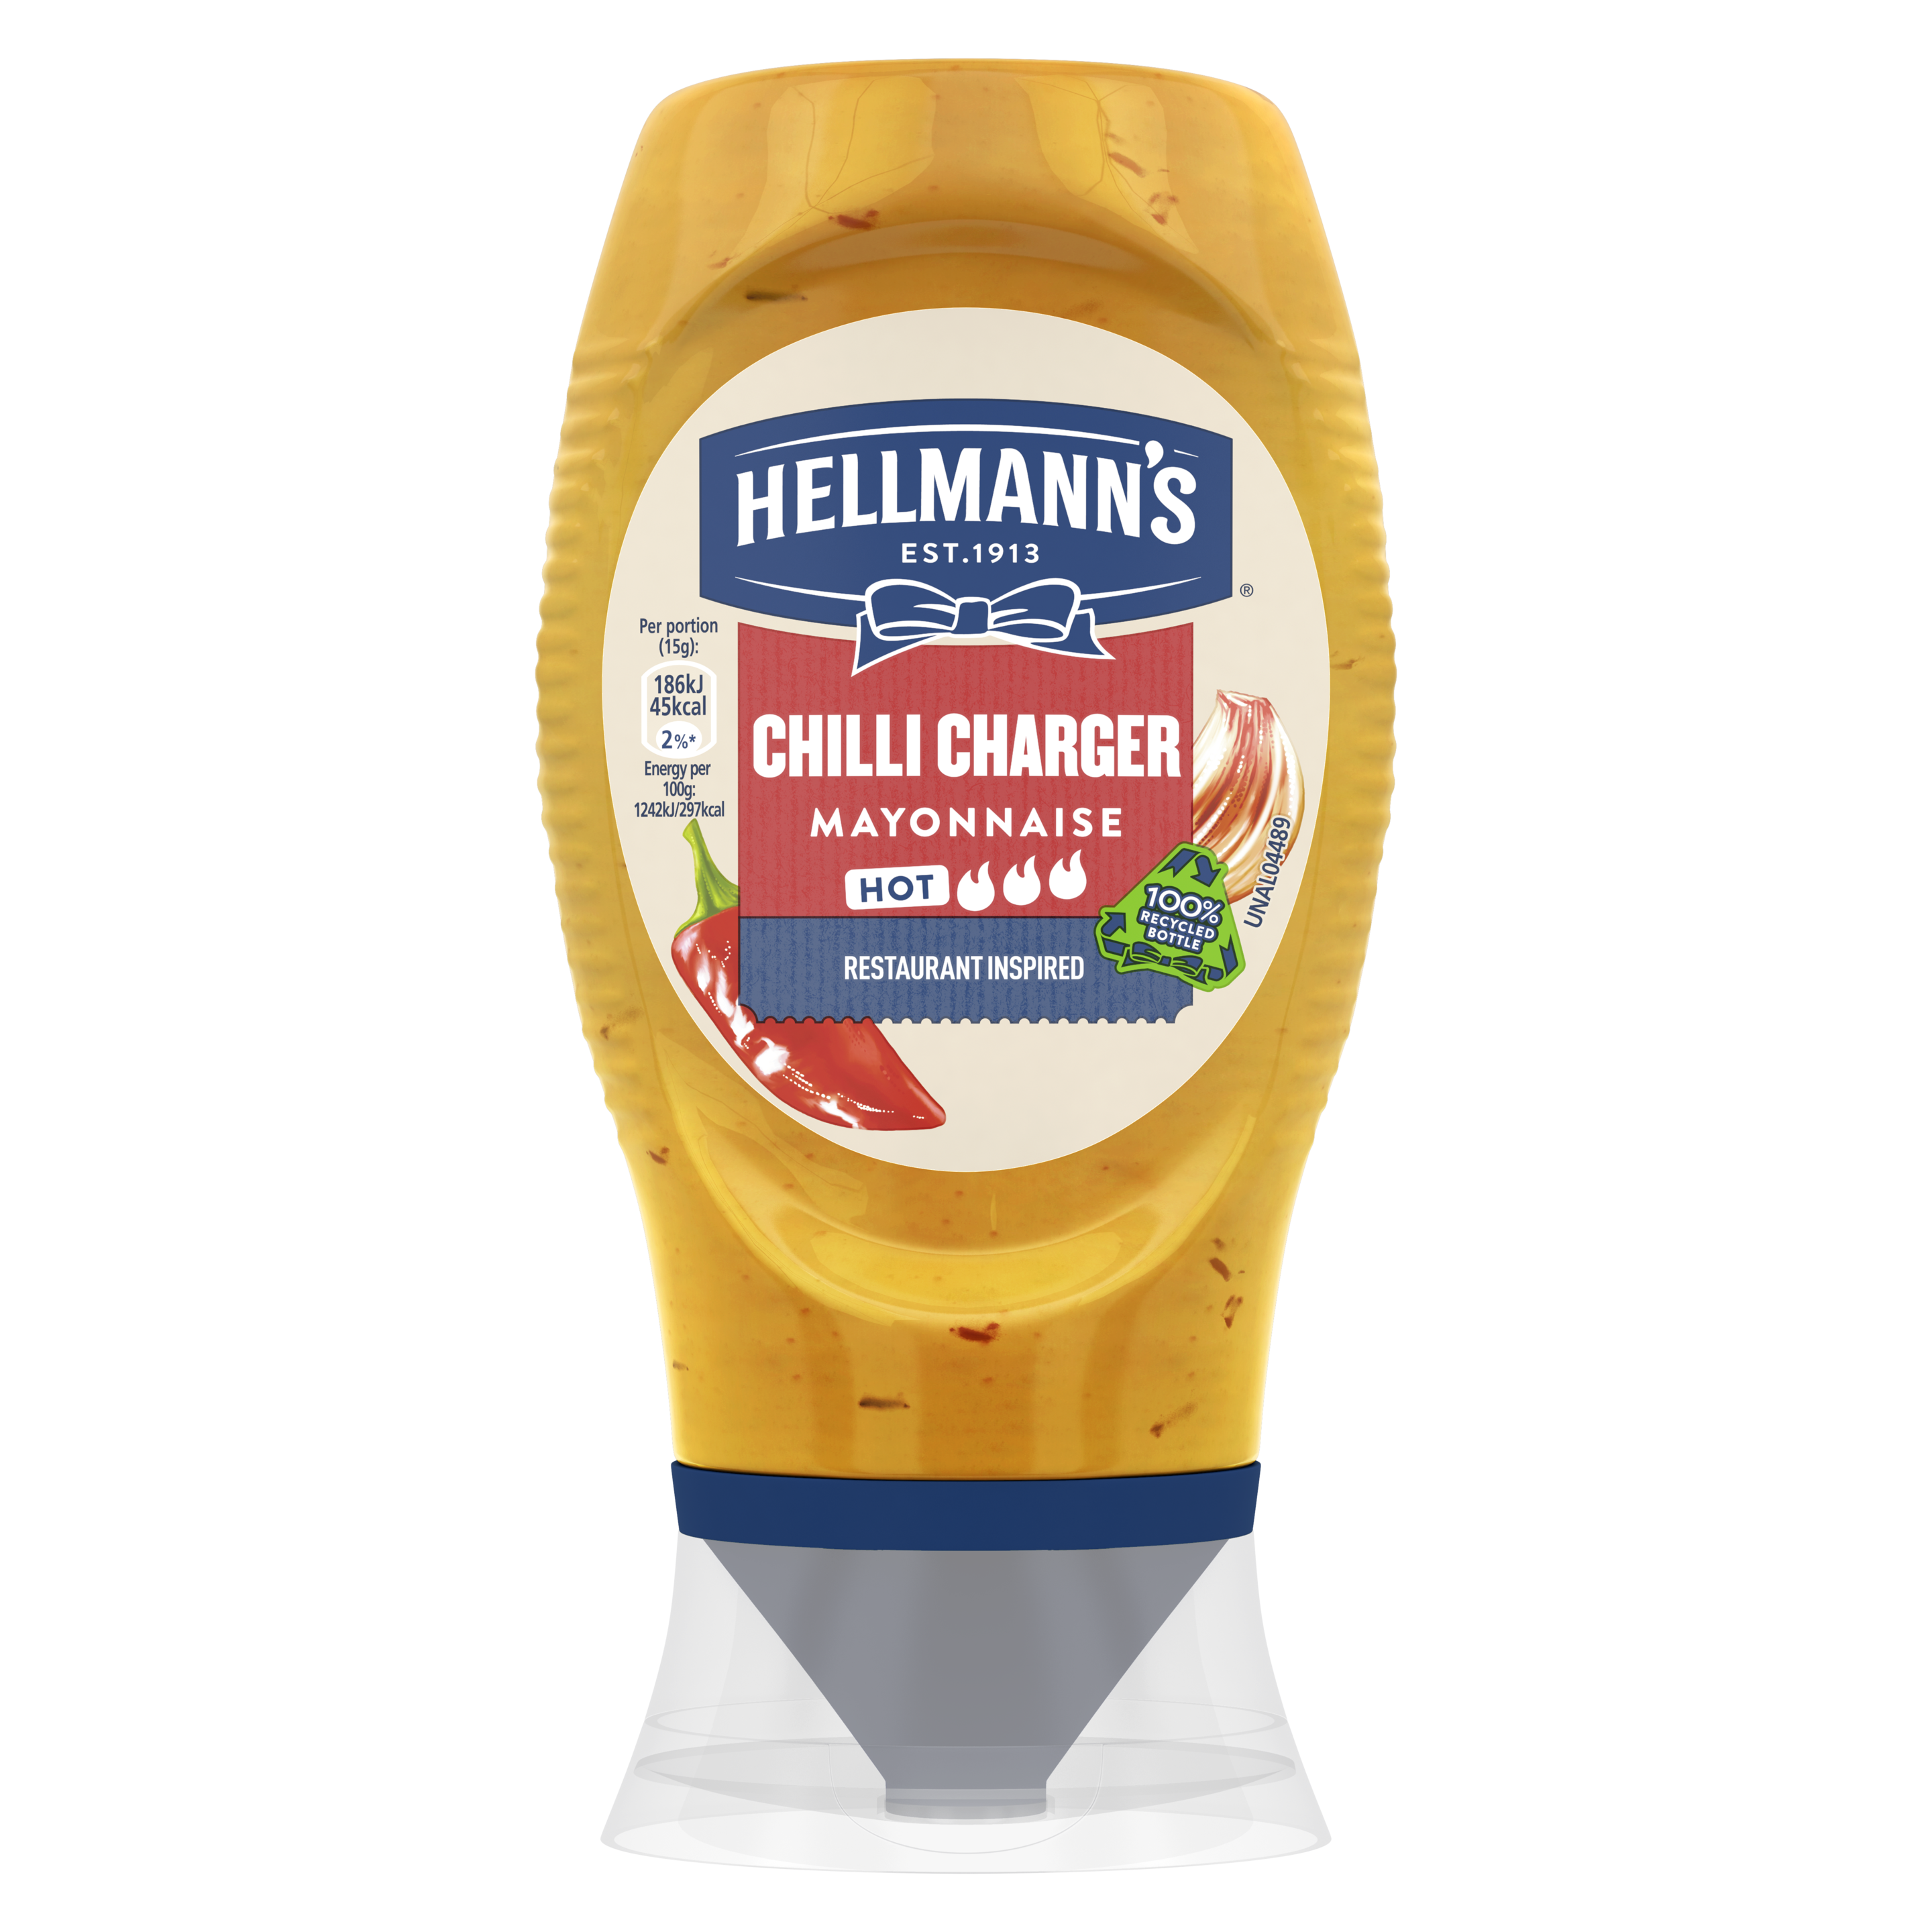 Hellmann’s Chilli Charger Mayonnaise 250ml